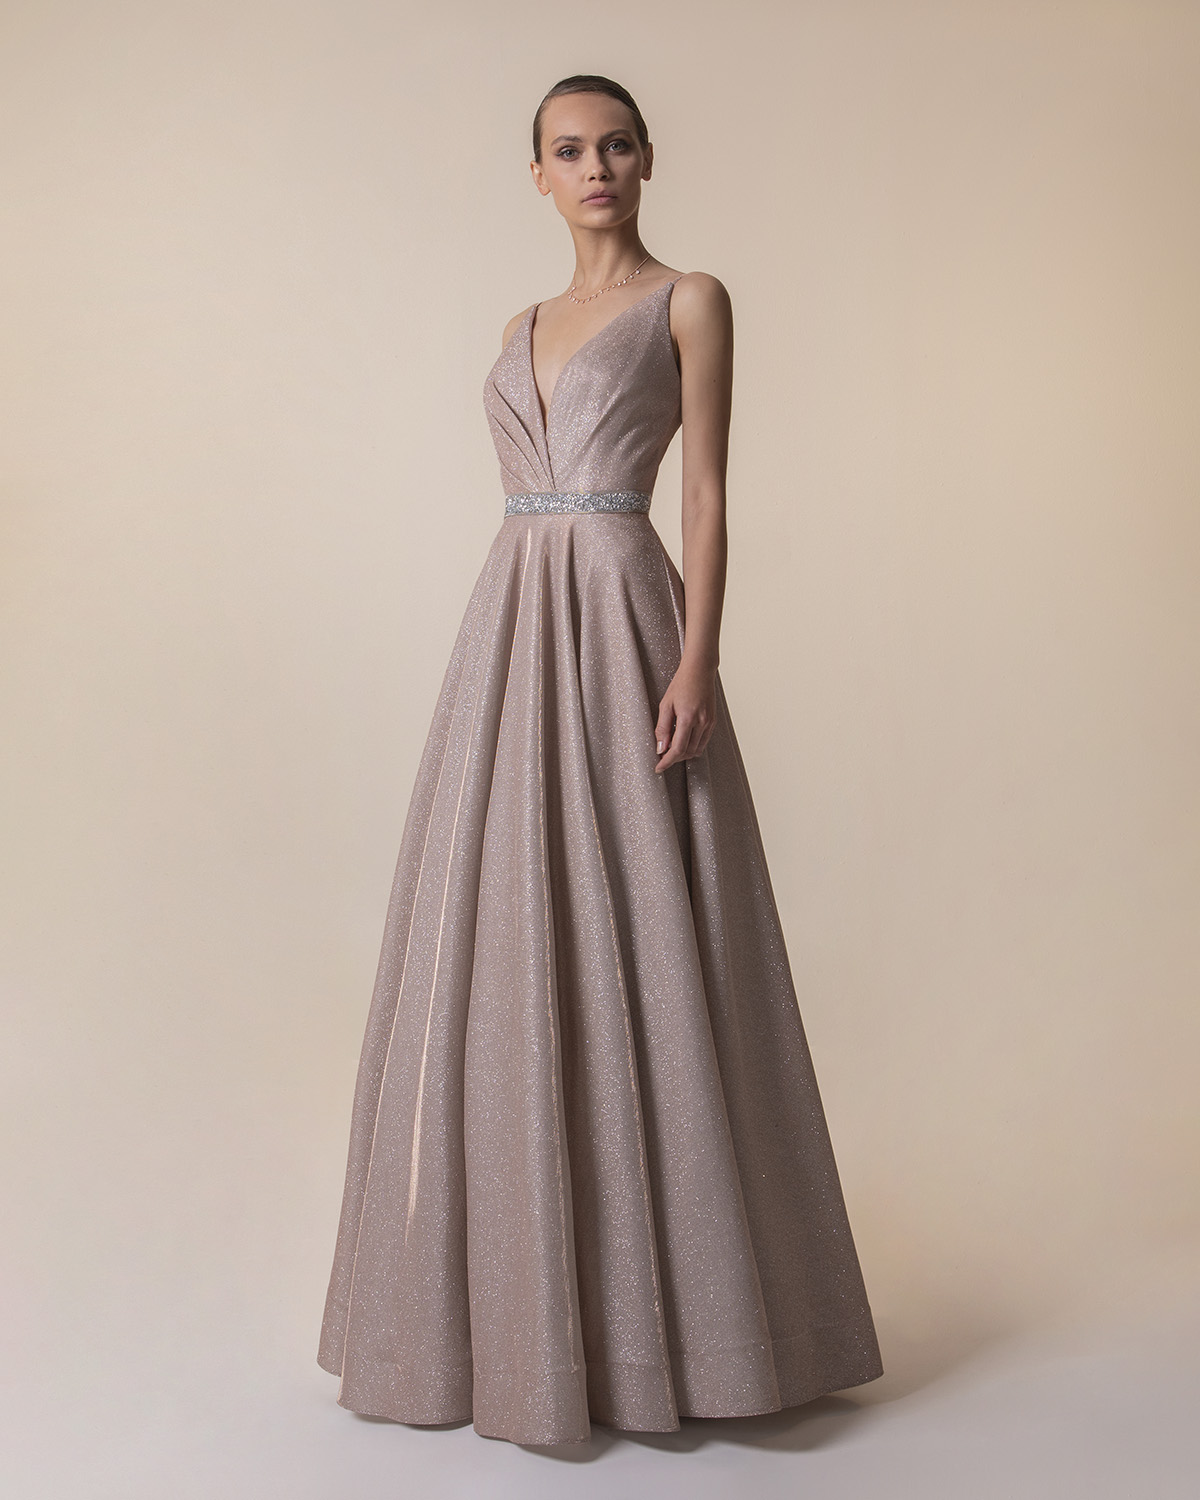 Вечерние платья / Long evening dress with shining fabric and beading around the waist